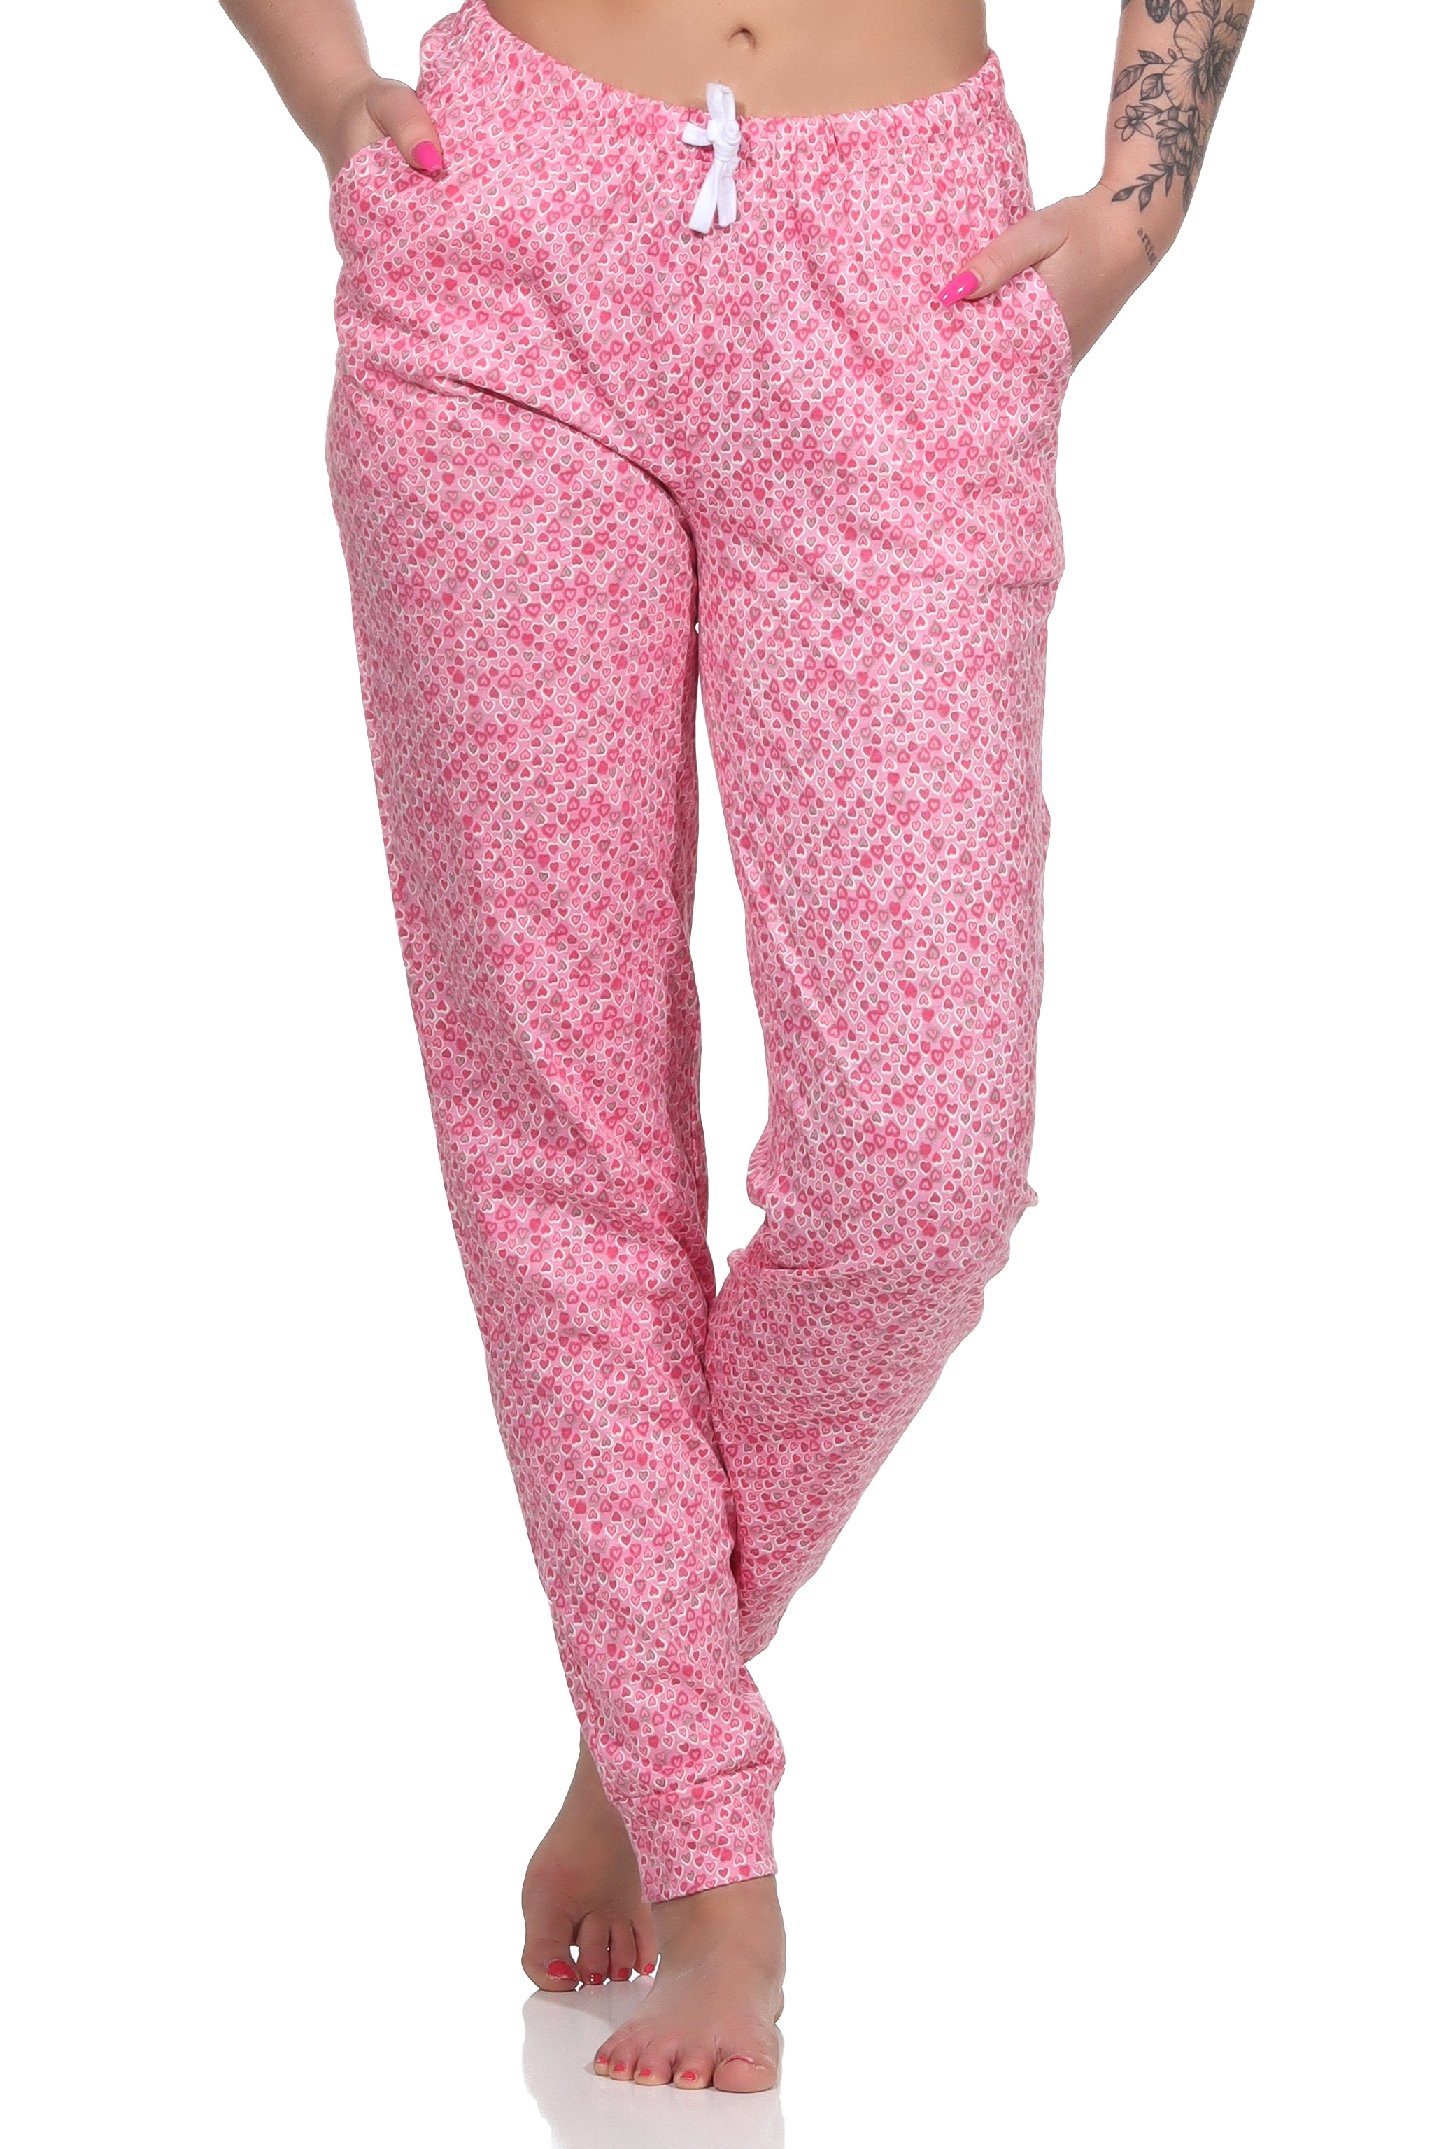 Normann Pyjama Damen Schlafanzug Pyjama Hose lang Mix & Match in Herz  Tupfen Optik - ideal zu kombinieren